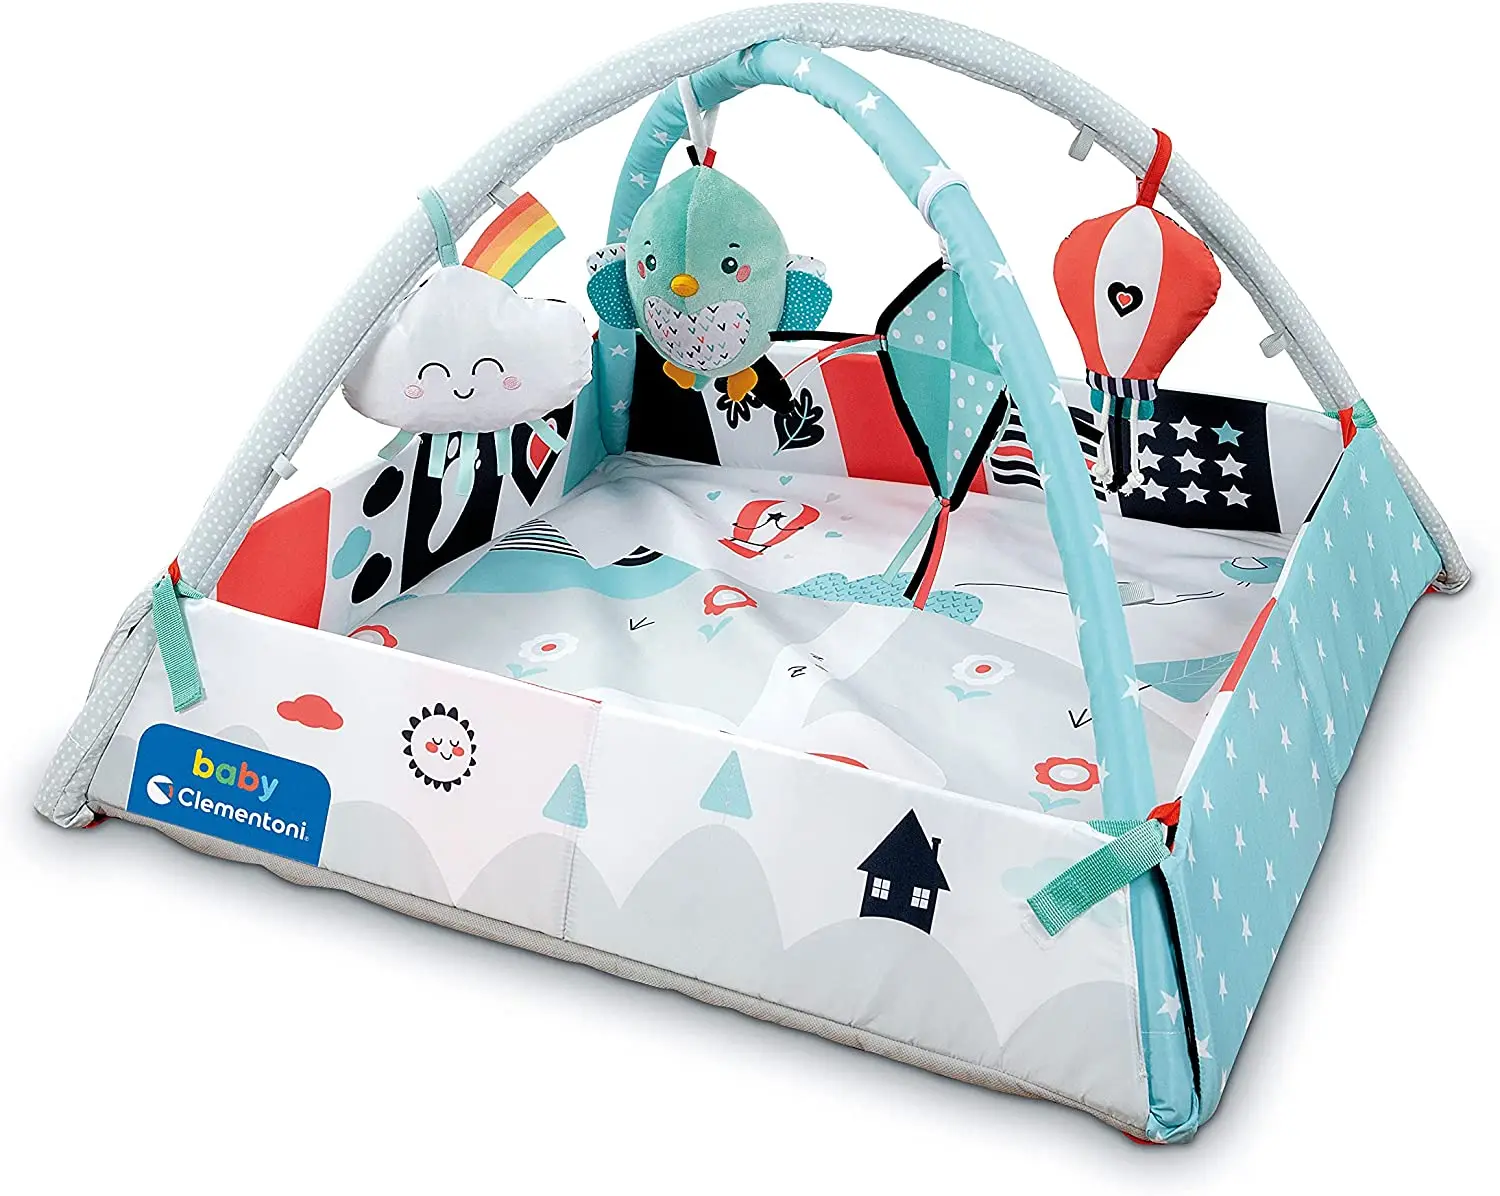 Baby Clementoni - 17319 - Baby Gymnastics Center B/W, 0 - 36 months.l Kids Carpet Play Mat Sports Frame Baby Activity Center Toy